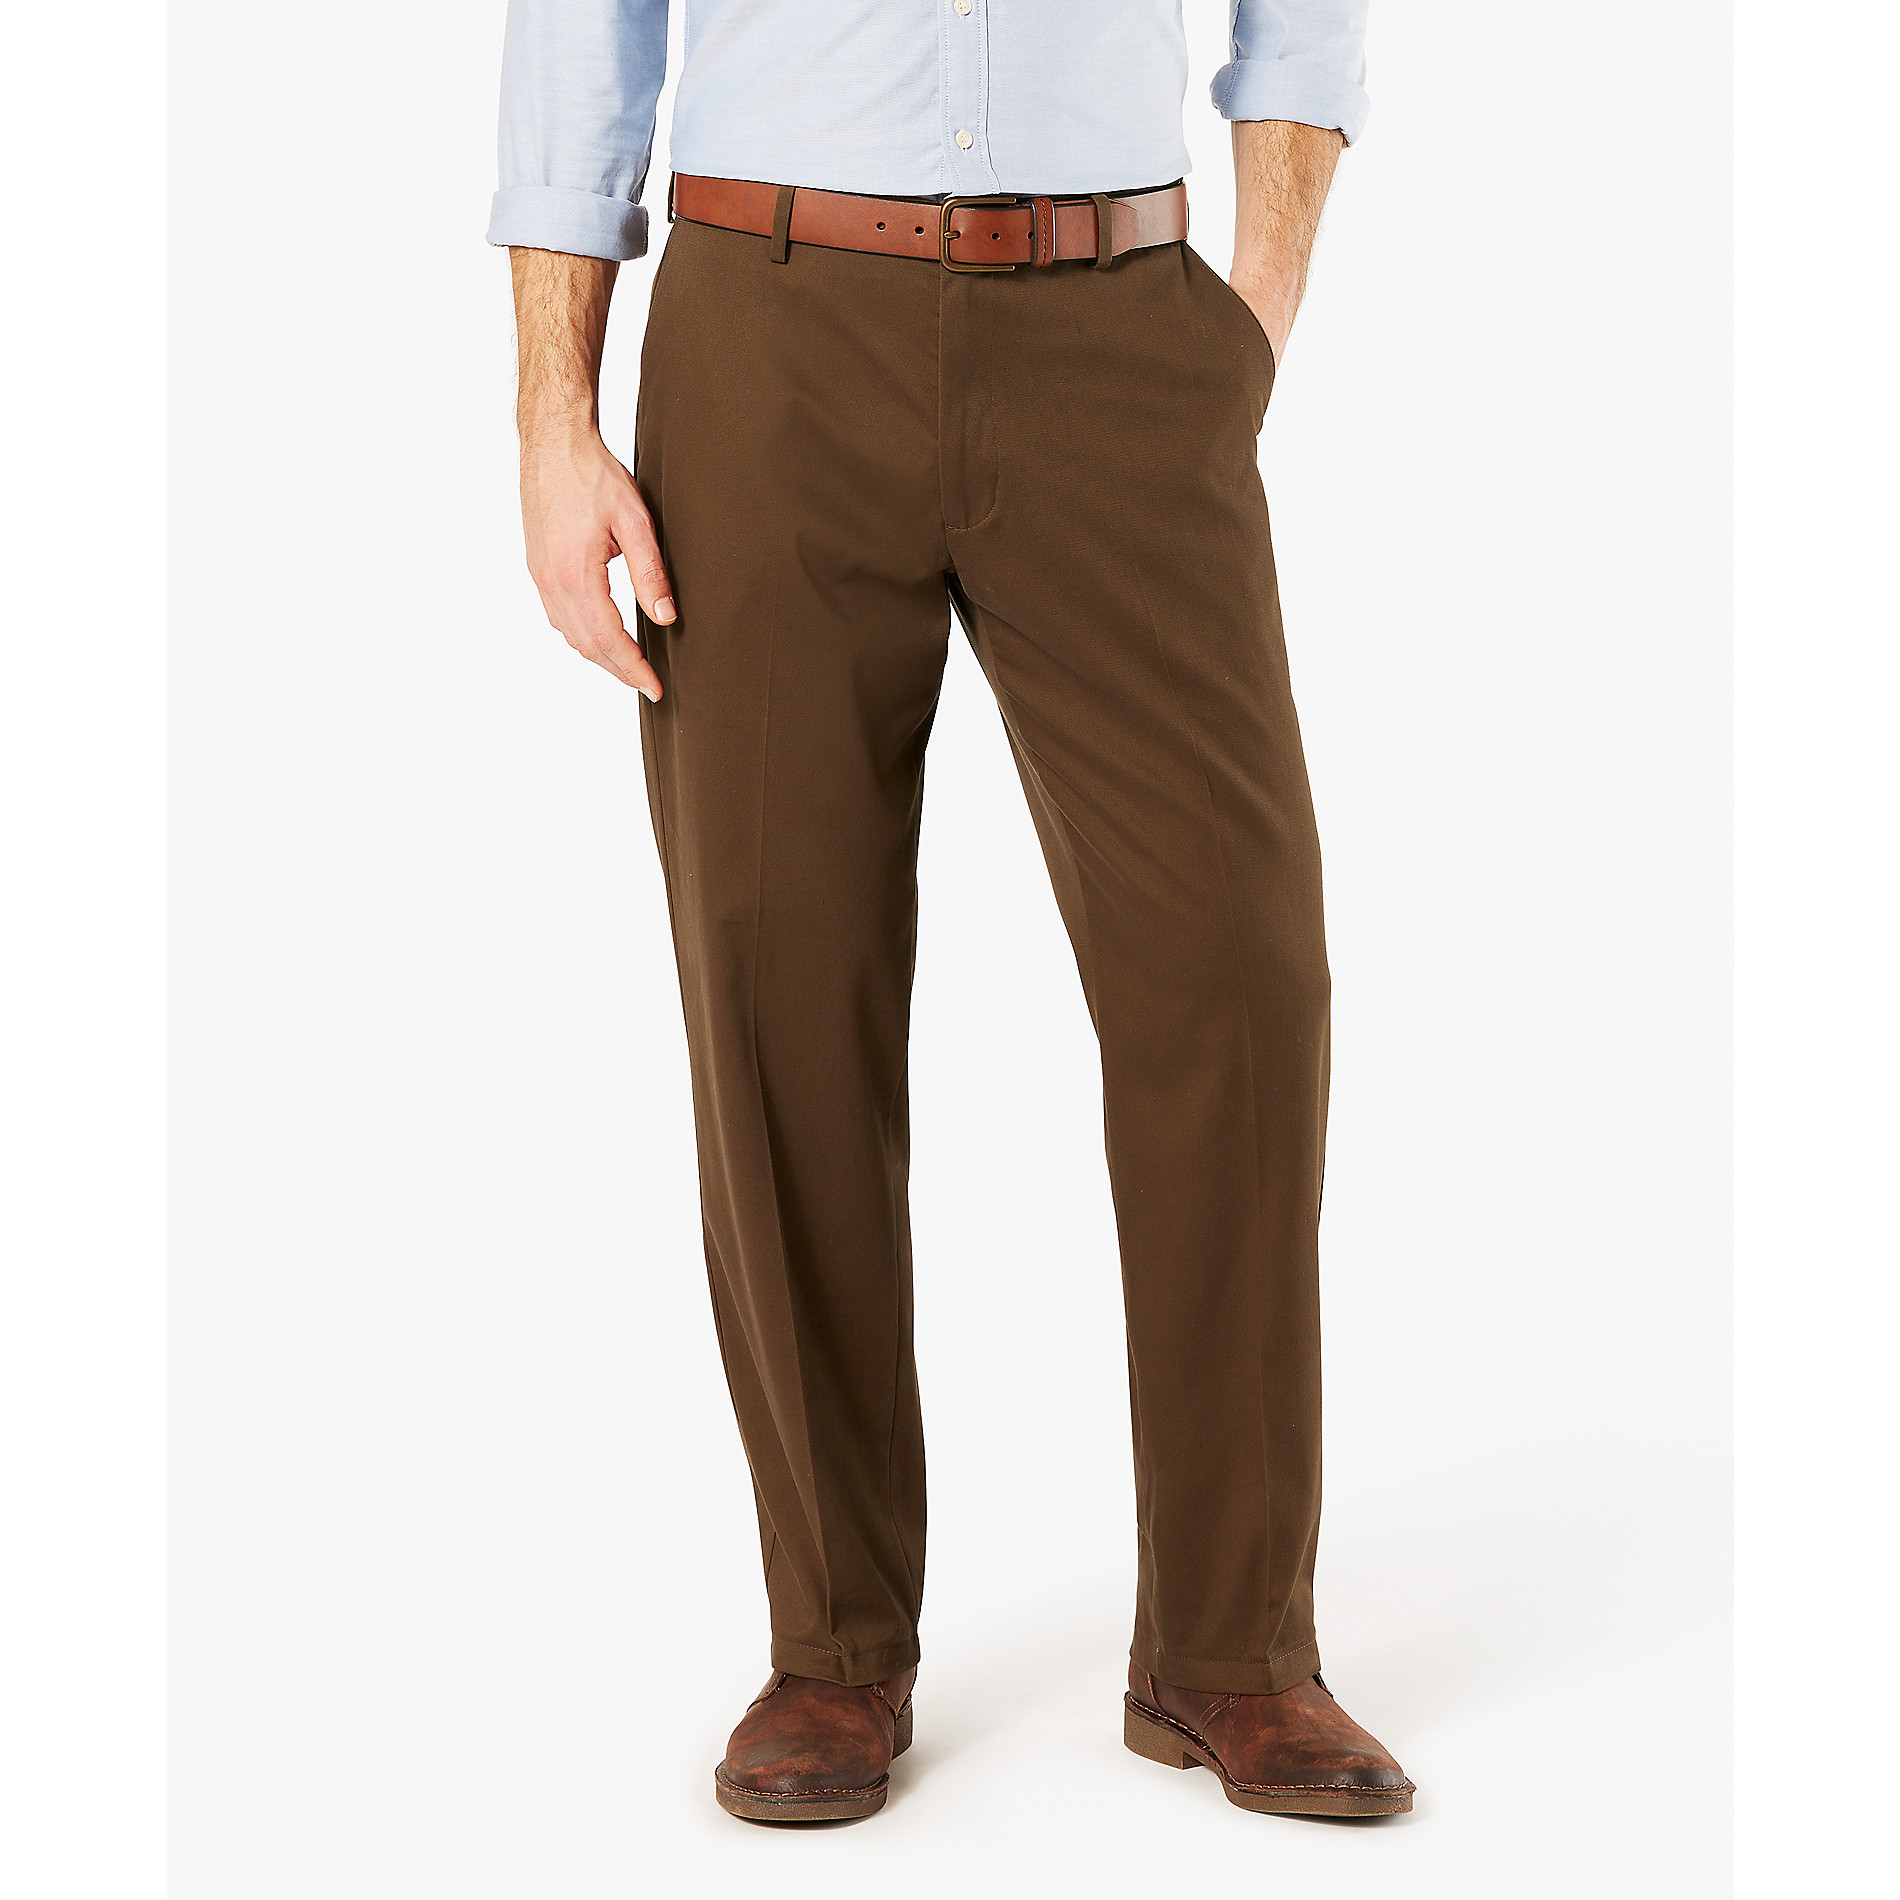 Dockers Men's Relaxed Fit Comfort Khaki Pants D4 | Shop Your Way ...